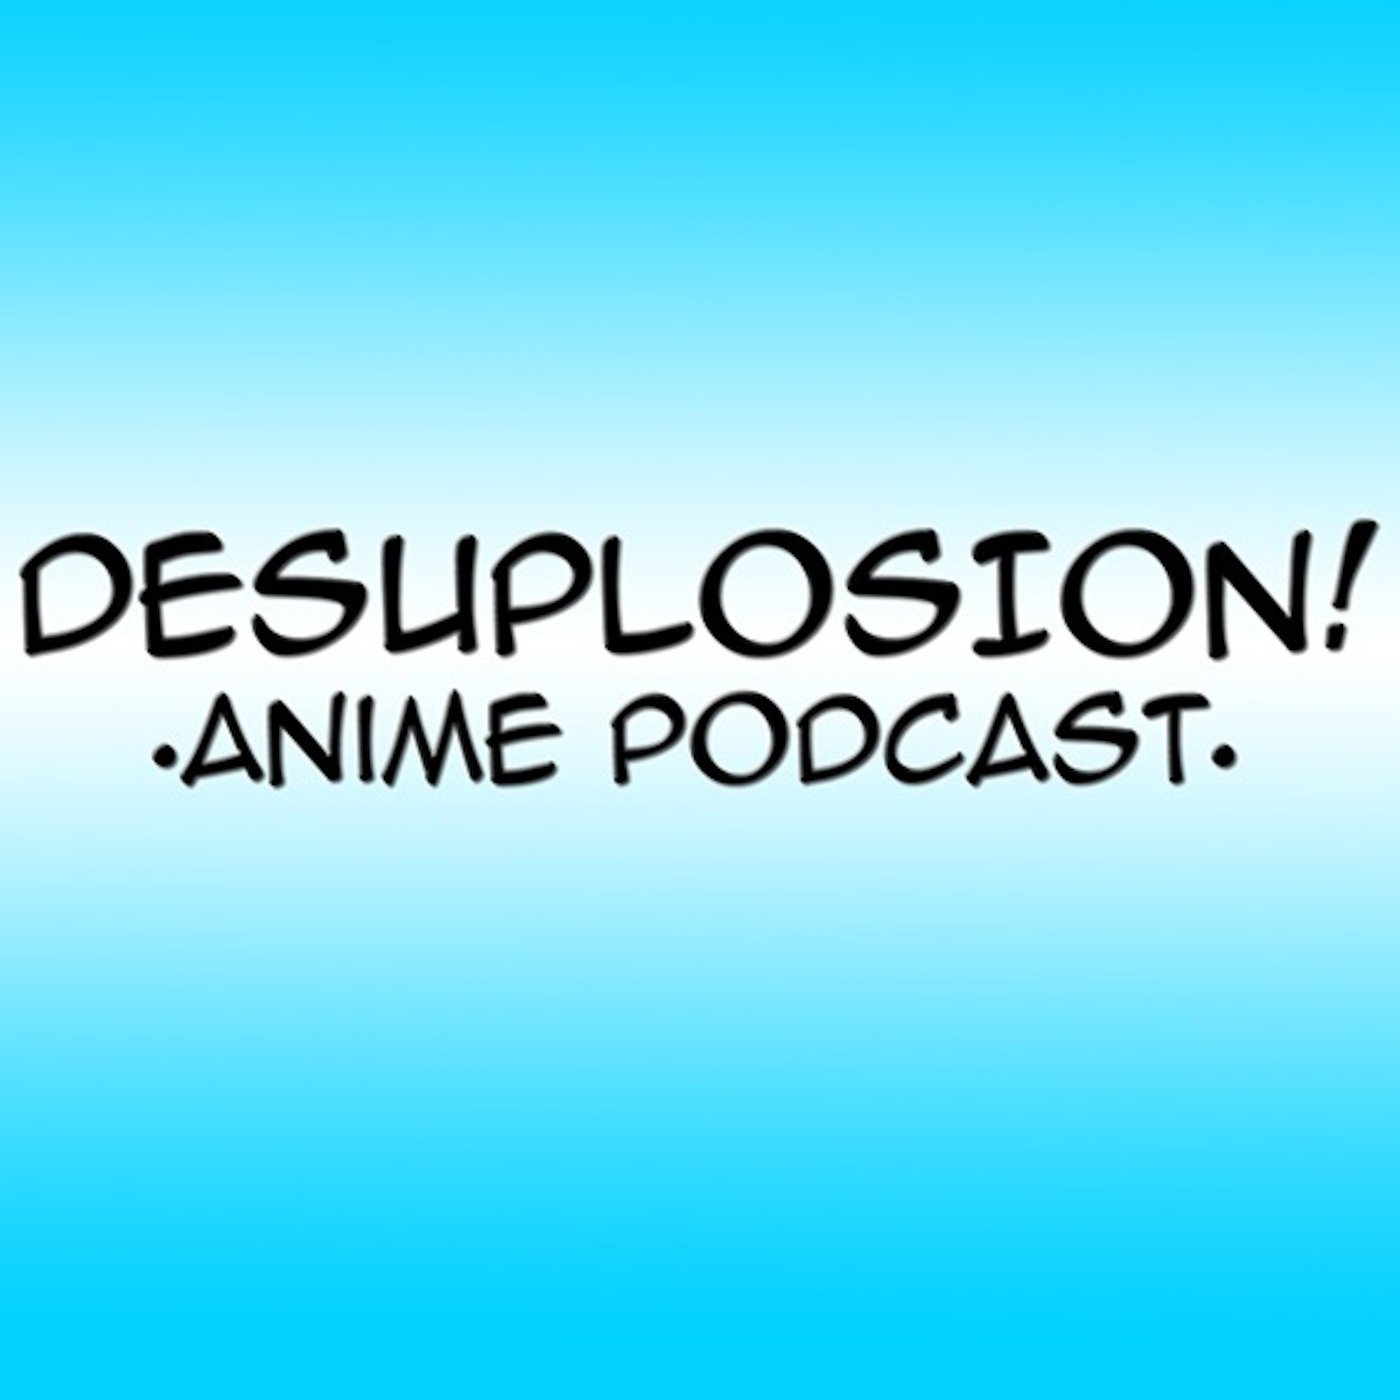 Desuplosion! Anime Podcast